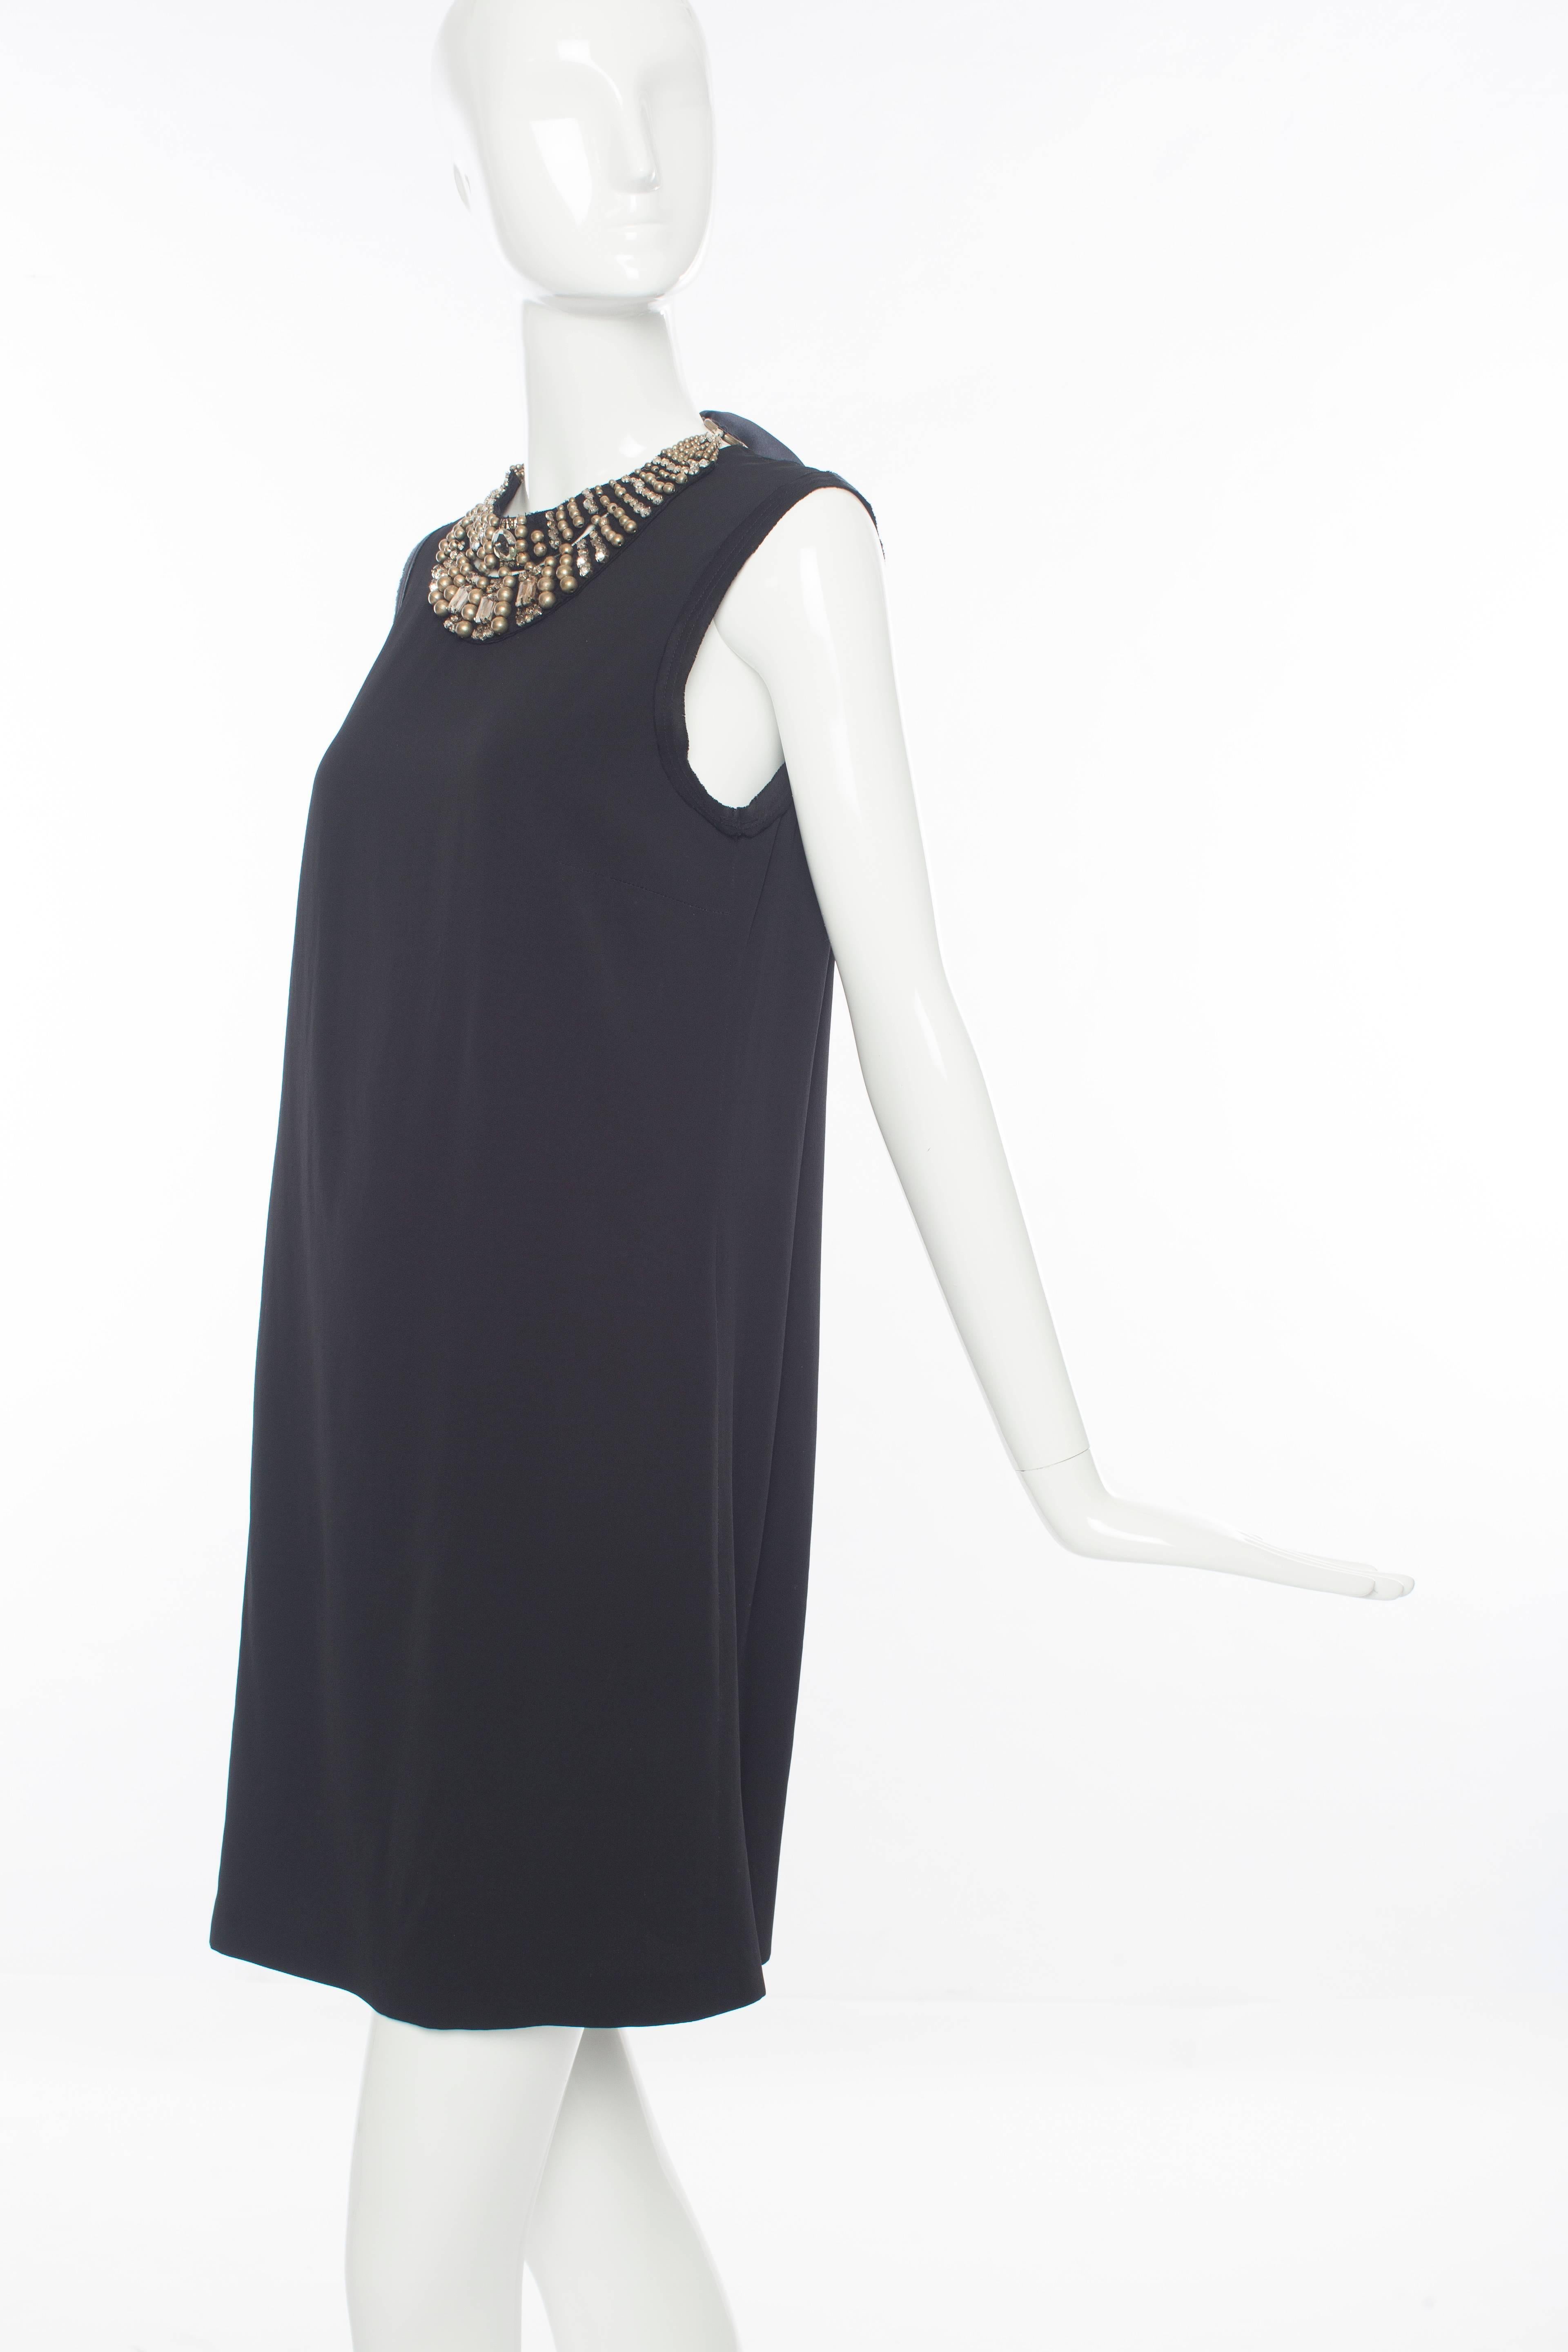 Women's Alber Elbaz For Lanvin Black Sleeveless Viscose Sheath Dress, Fall 2007 For Sale